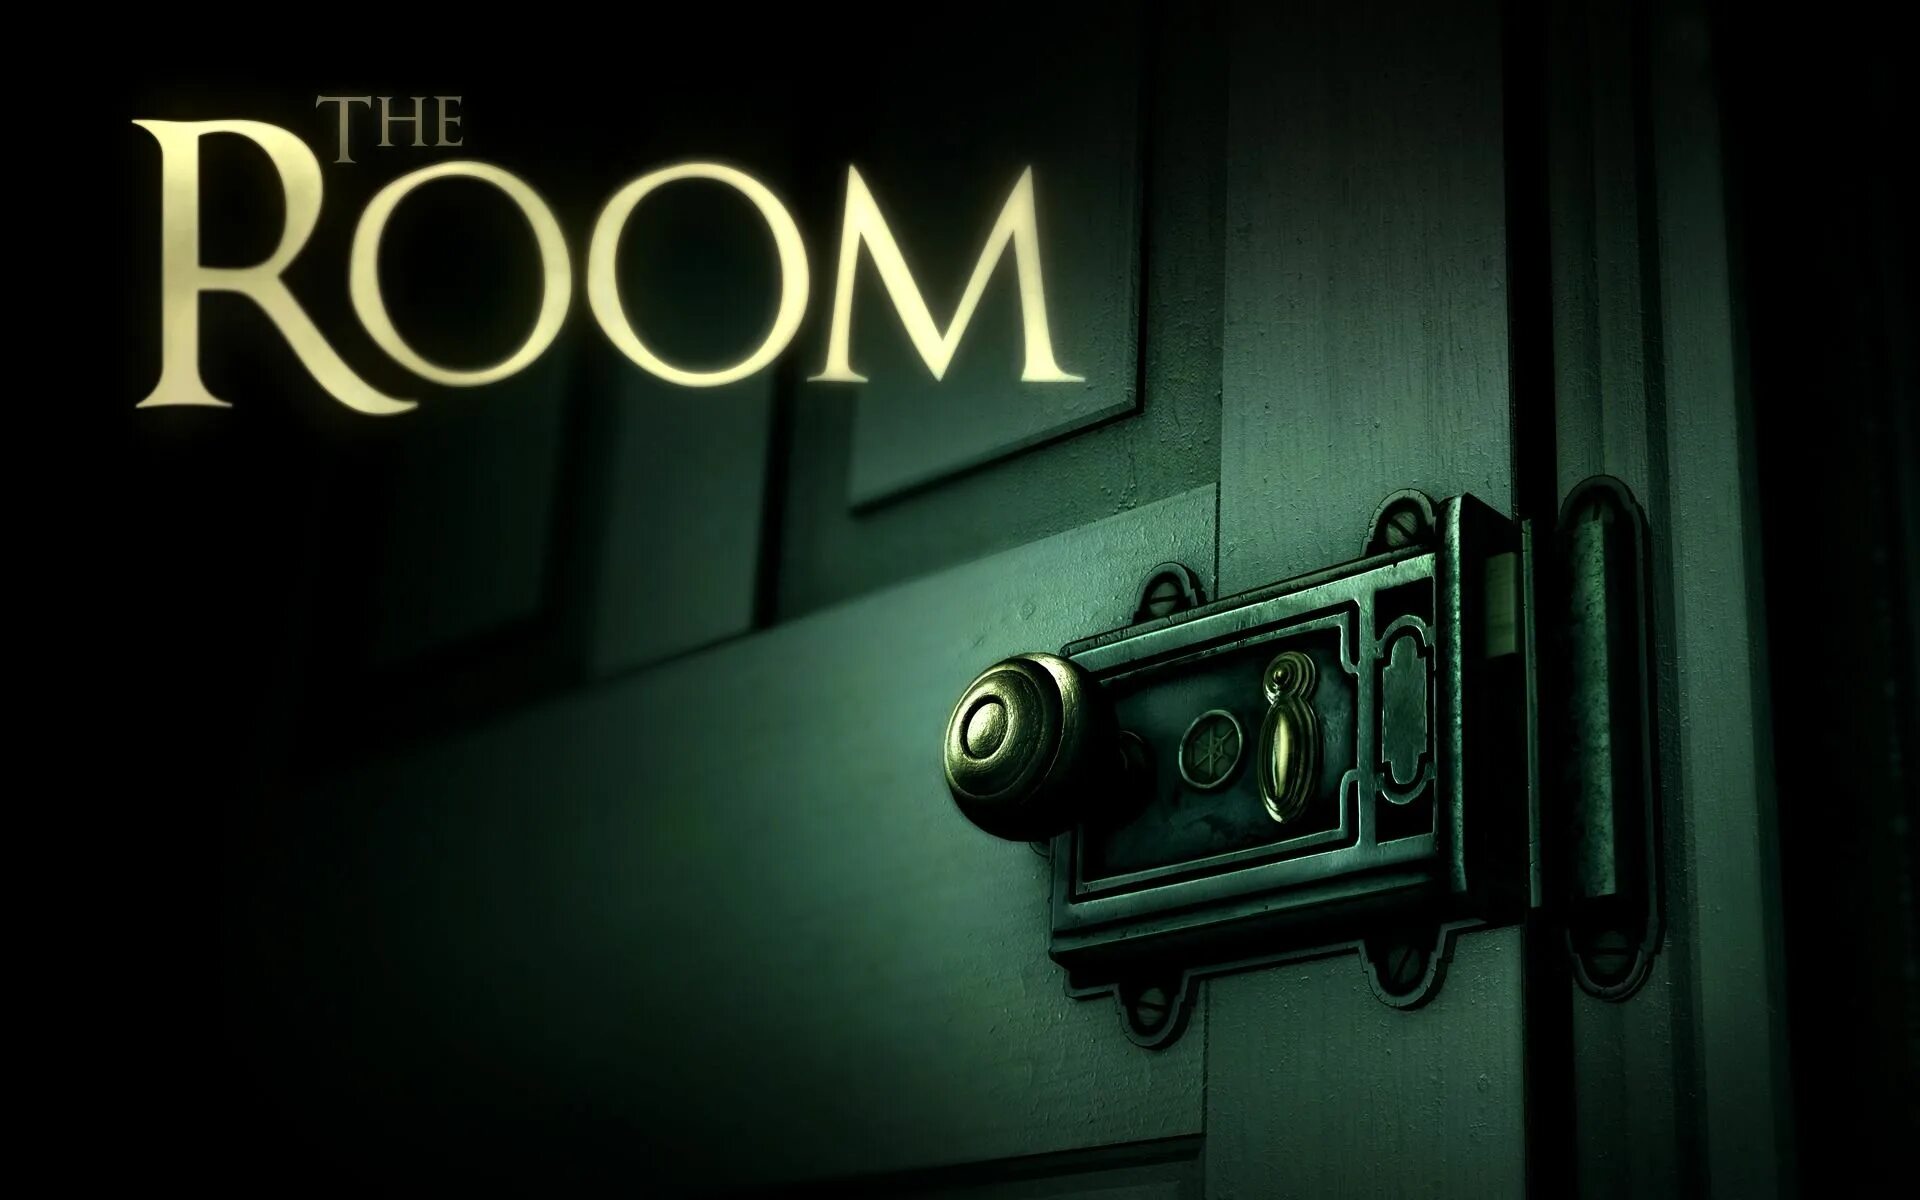 The room poster. The Room (игра). Room головоломка. Комната для игр. Румс игра.